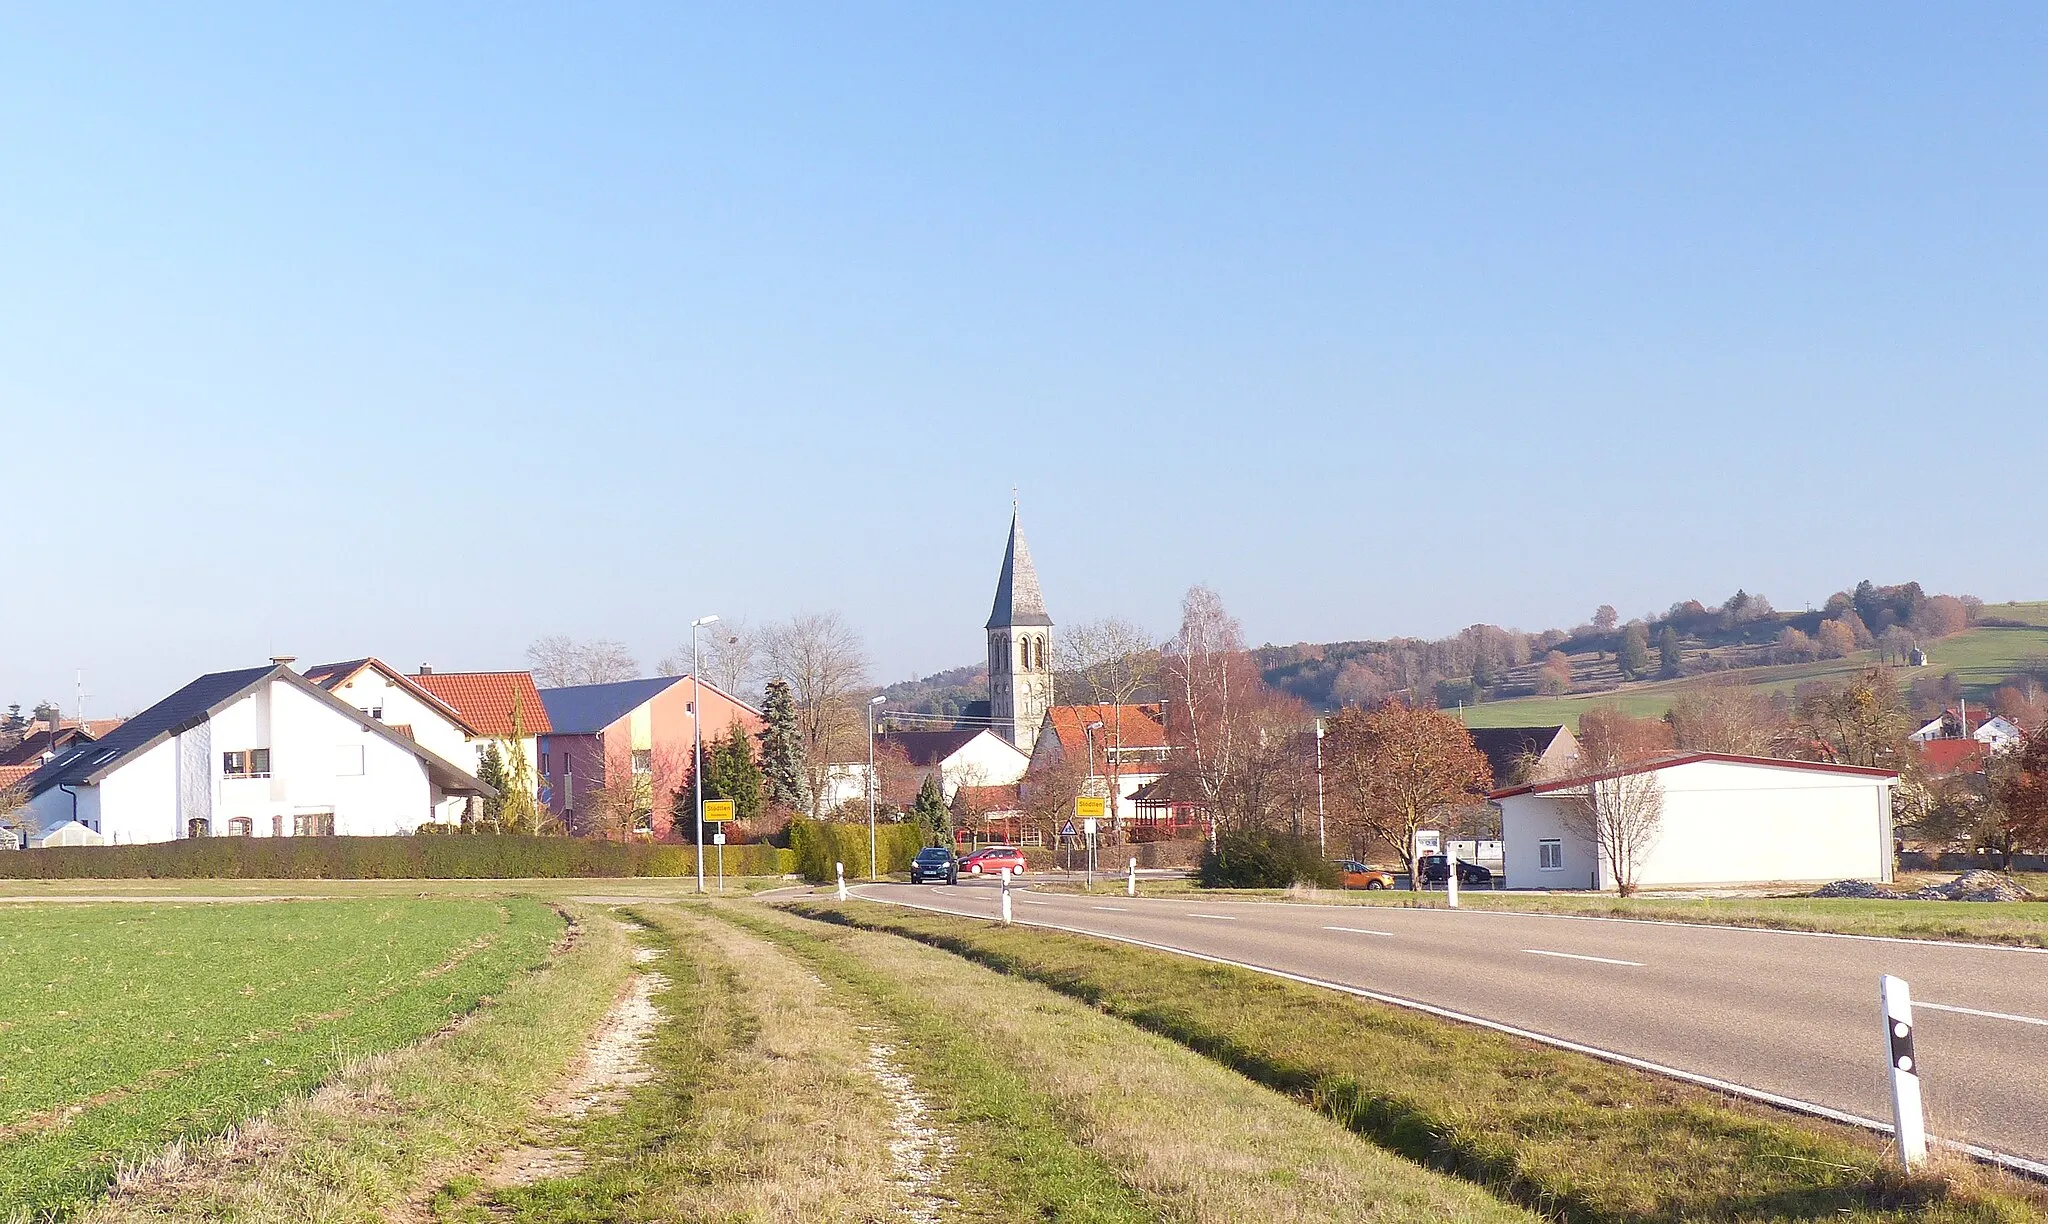 Photo showing: The municipality of Stödtlen